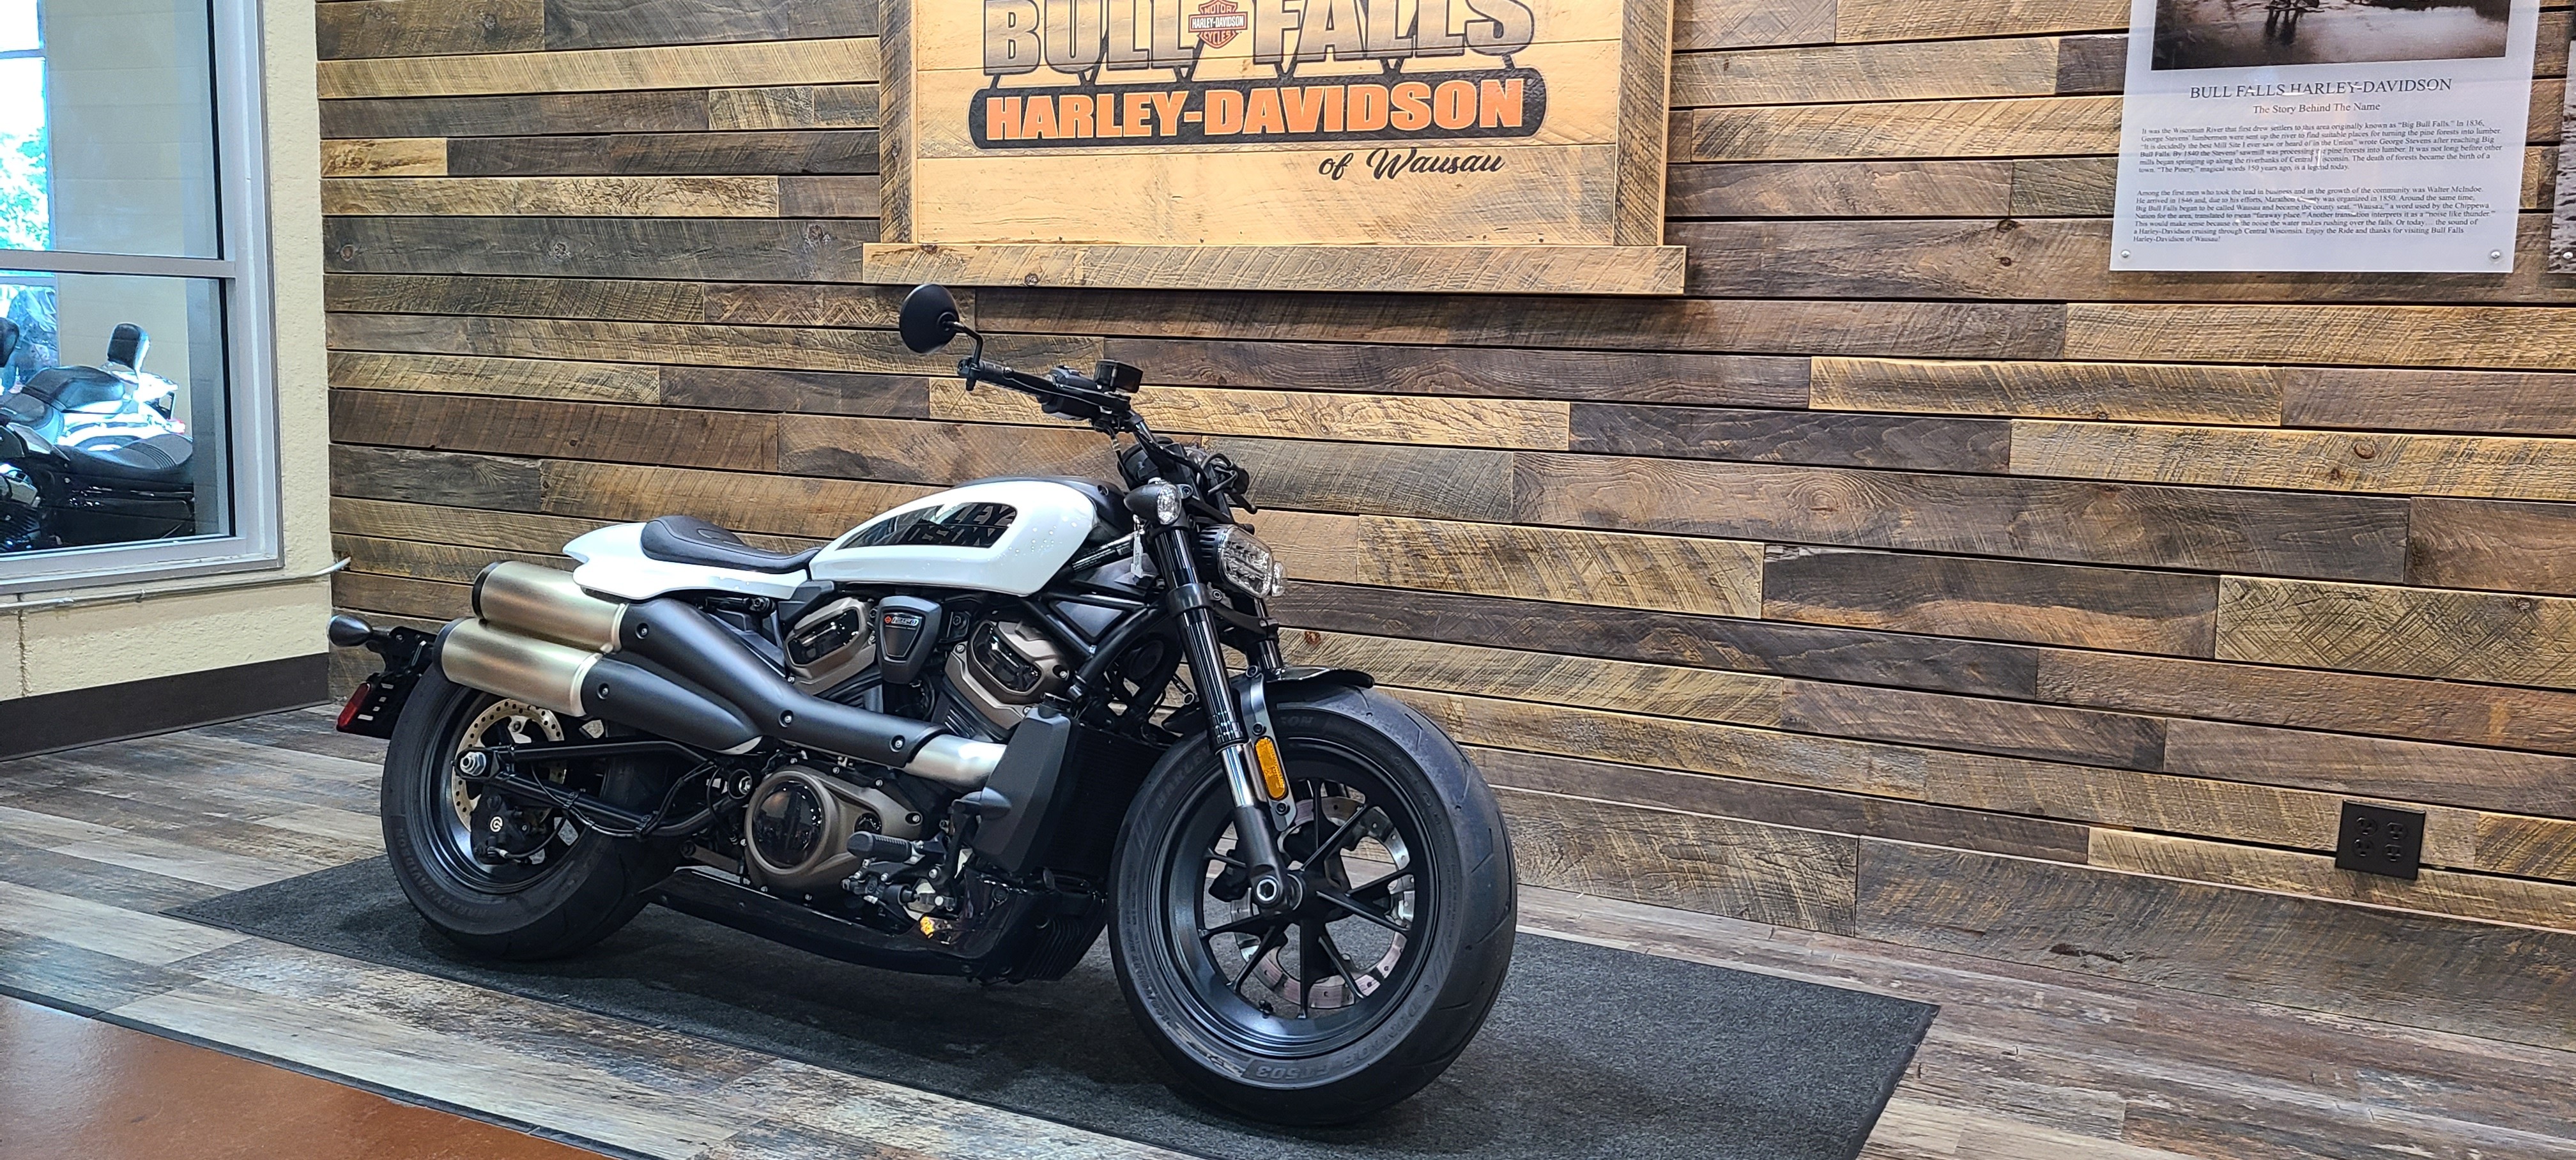 2021 Harley-Davidson Sportster S at Bull Falls Harley-Davidson